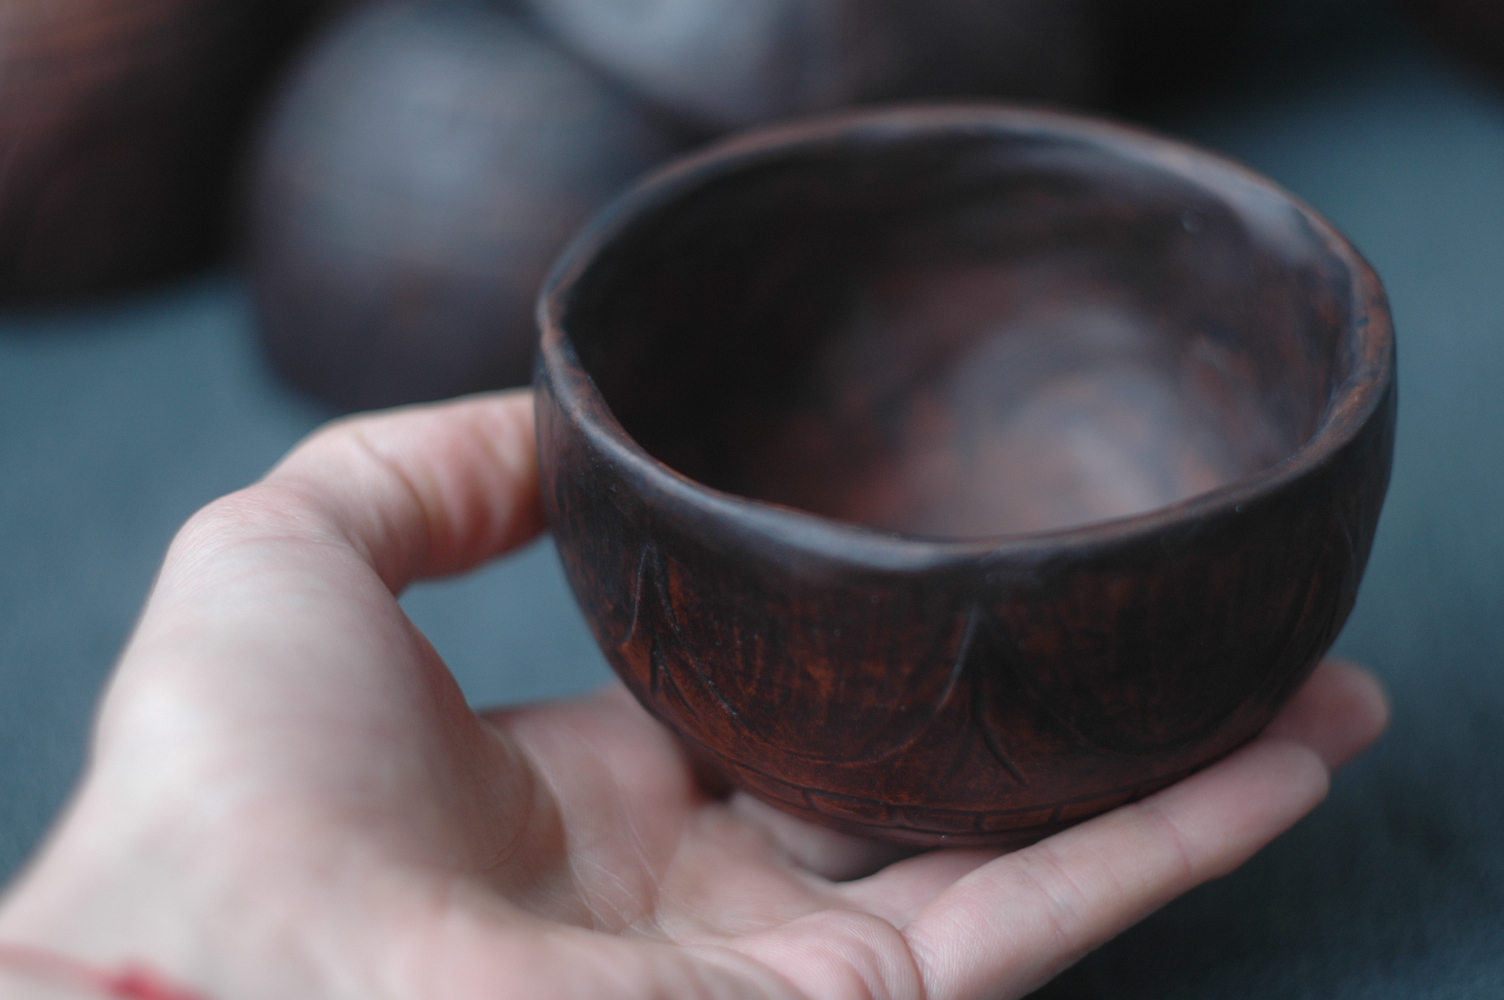 Handmade small pottery ceramic bowl “Sun” ~7oz